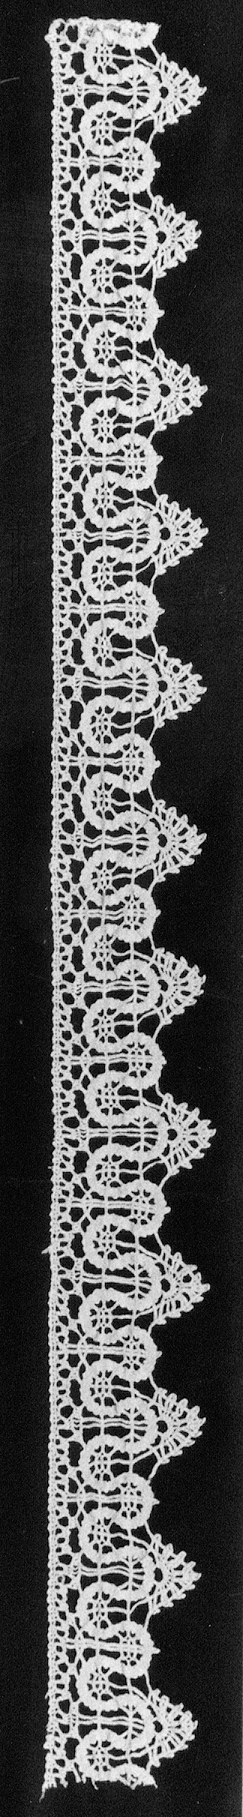 Bobbin lace border